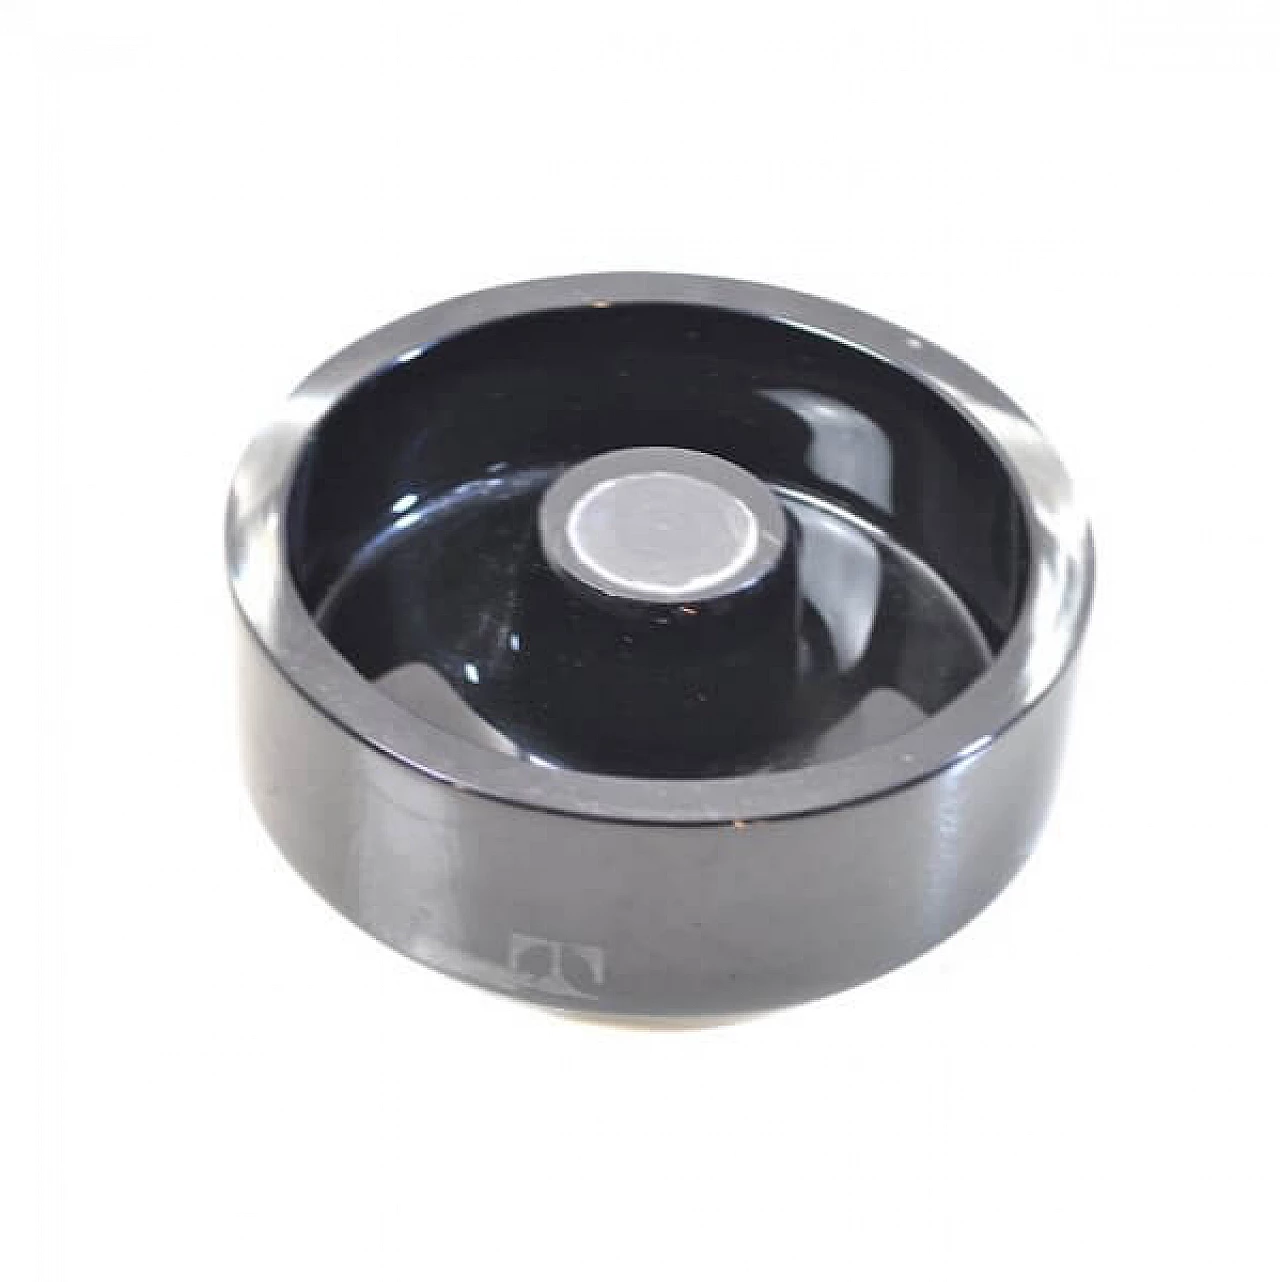 Smoked glass ashtray by Tecno, 60s 1213050